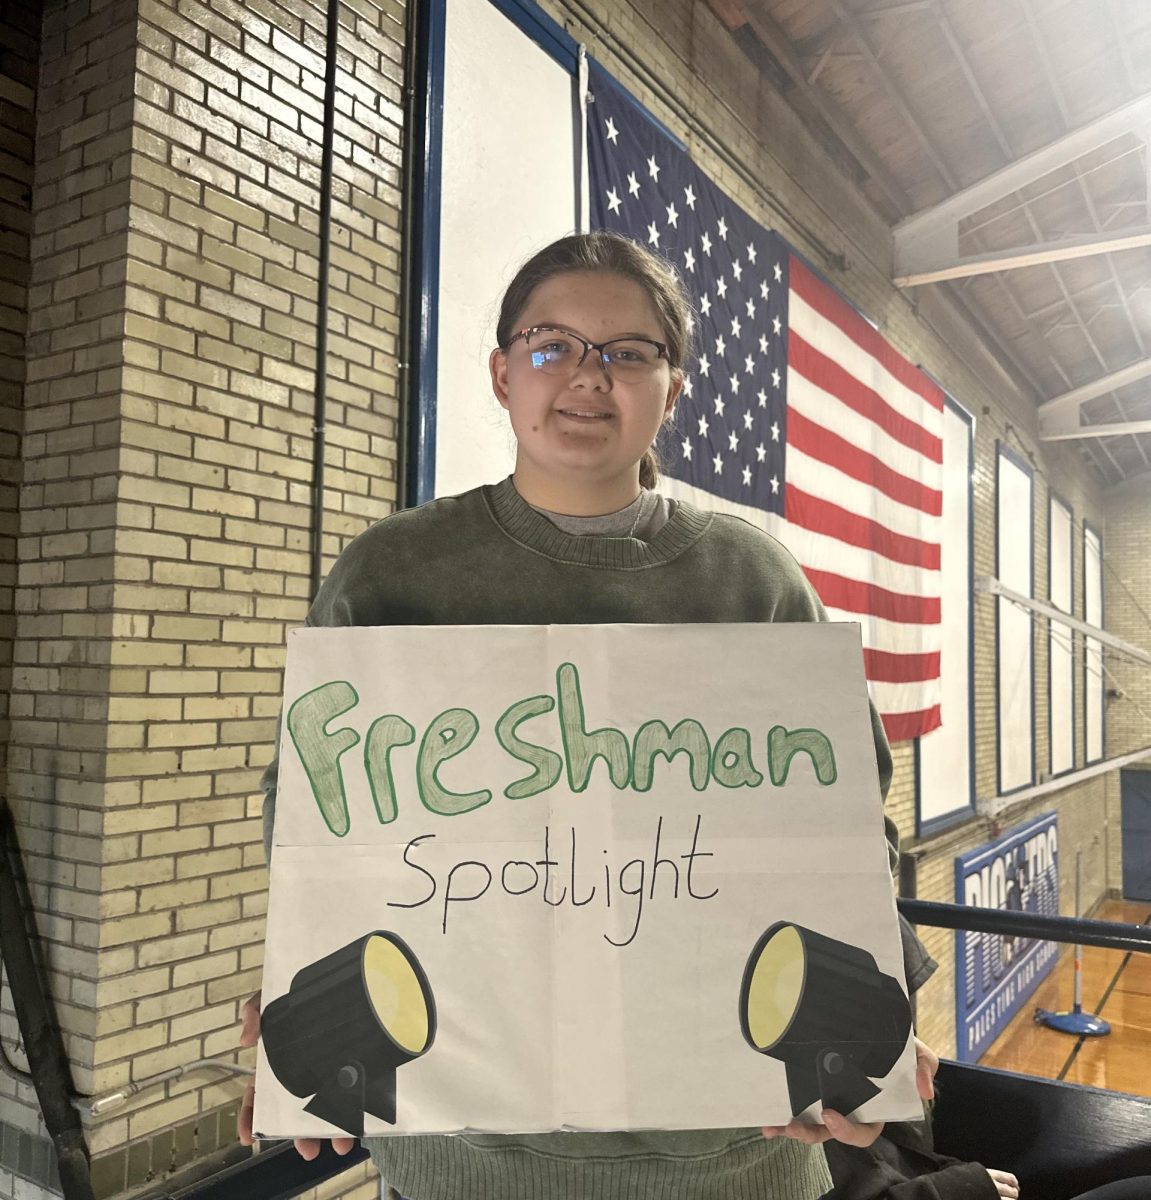 Freshman Spotlight: Brylee Tingley